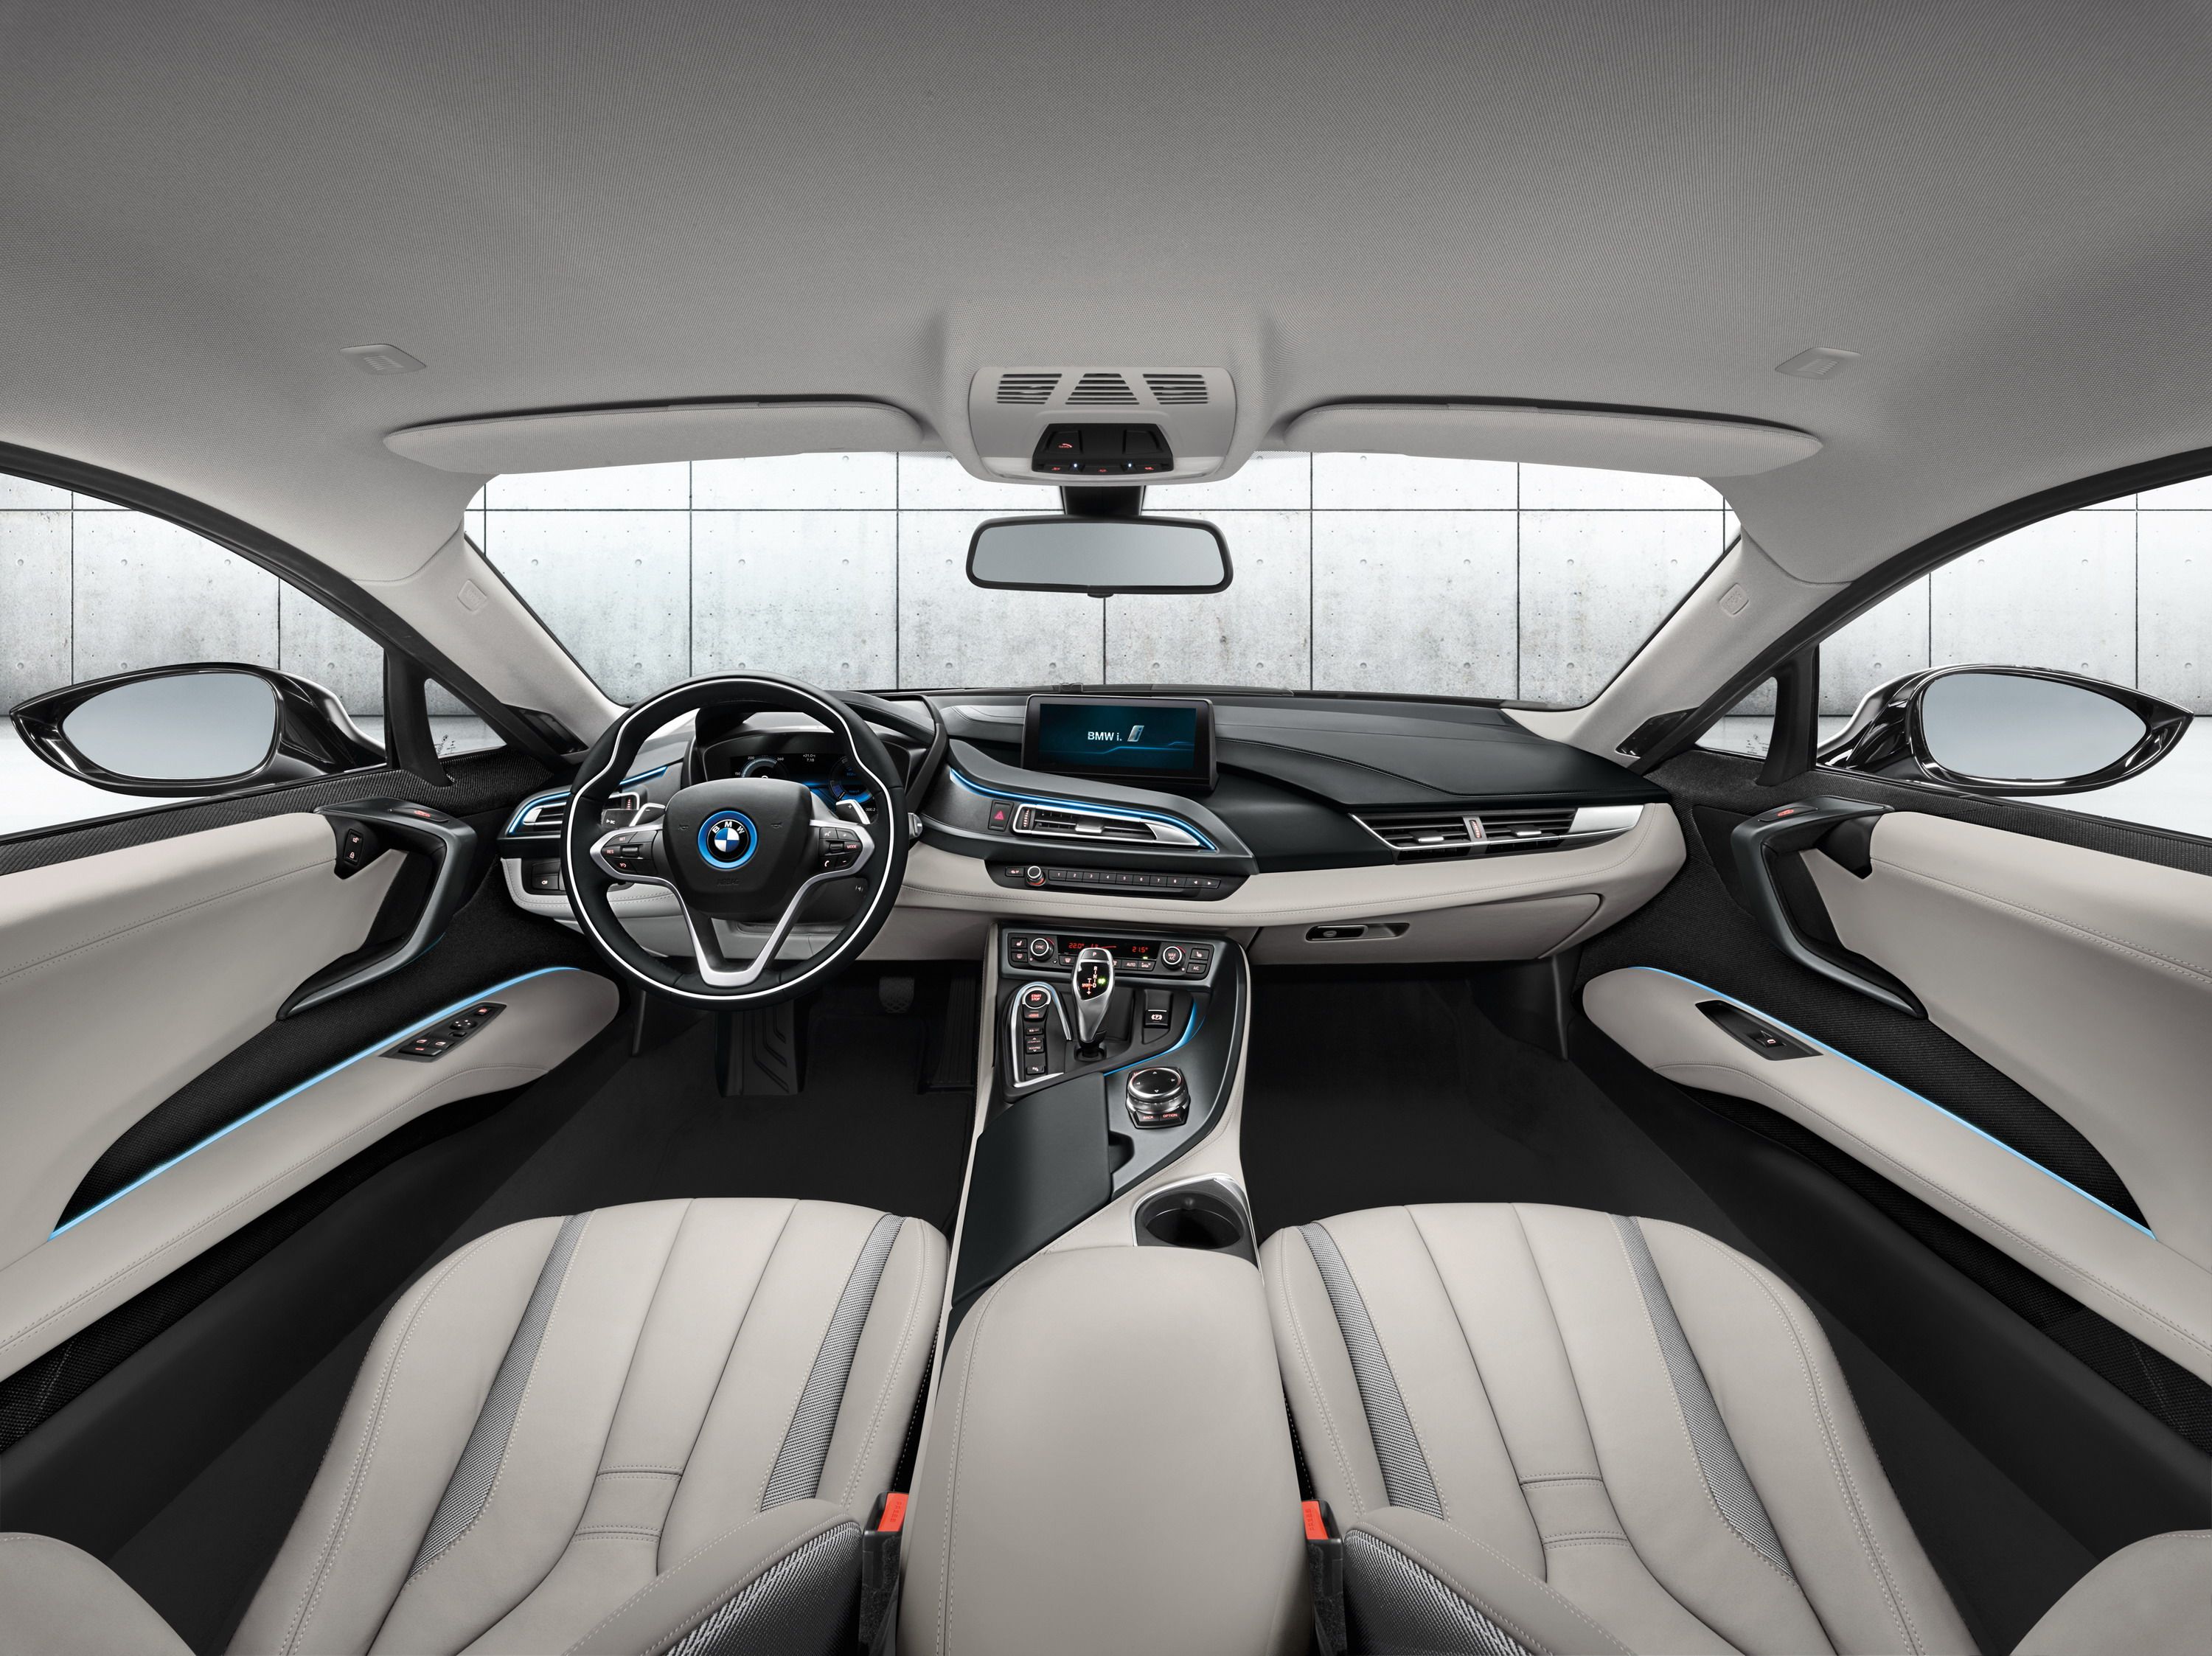 Updated interior with i8-exclusive design